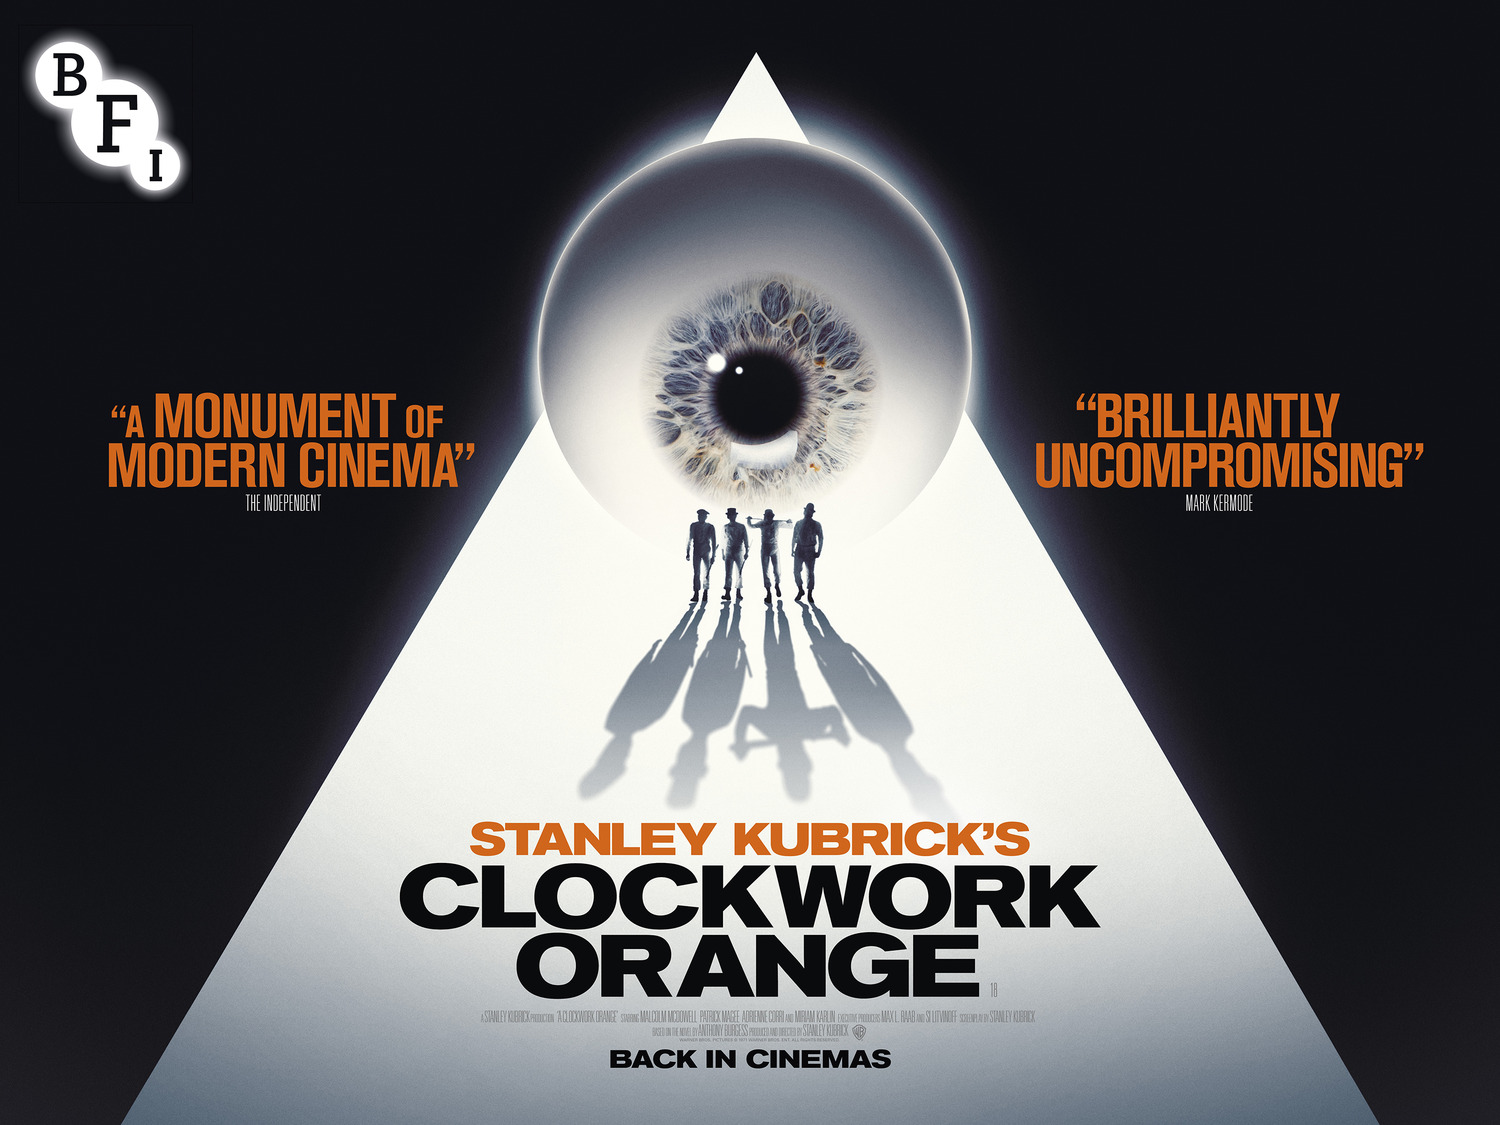 Extra Large Movie Poster Image for A Clockwork Orange (#3 of 3)